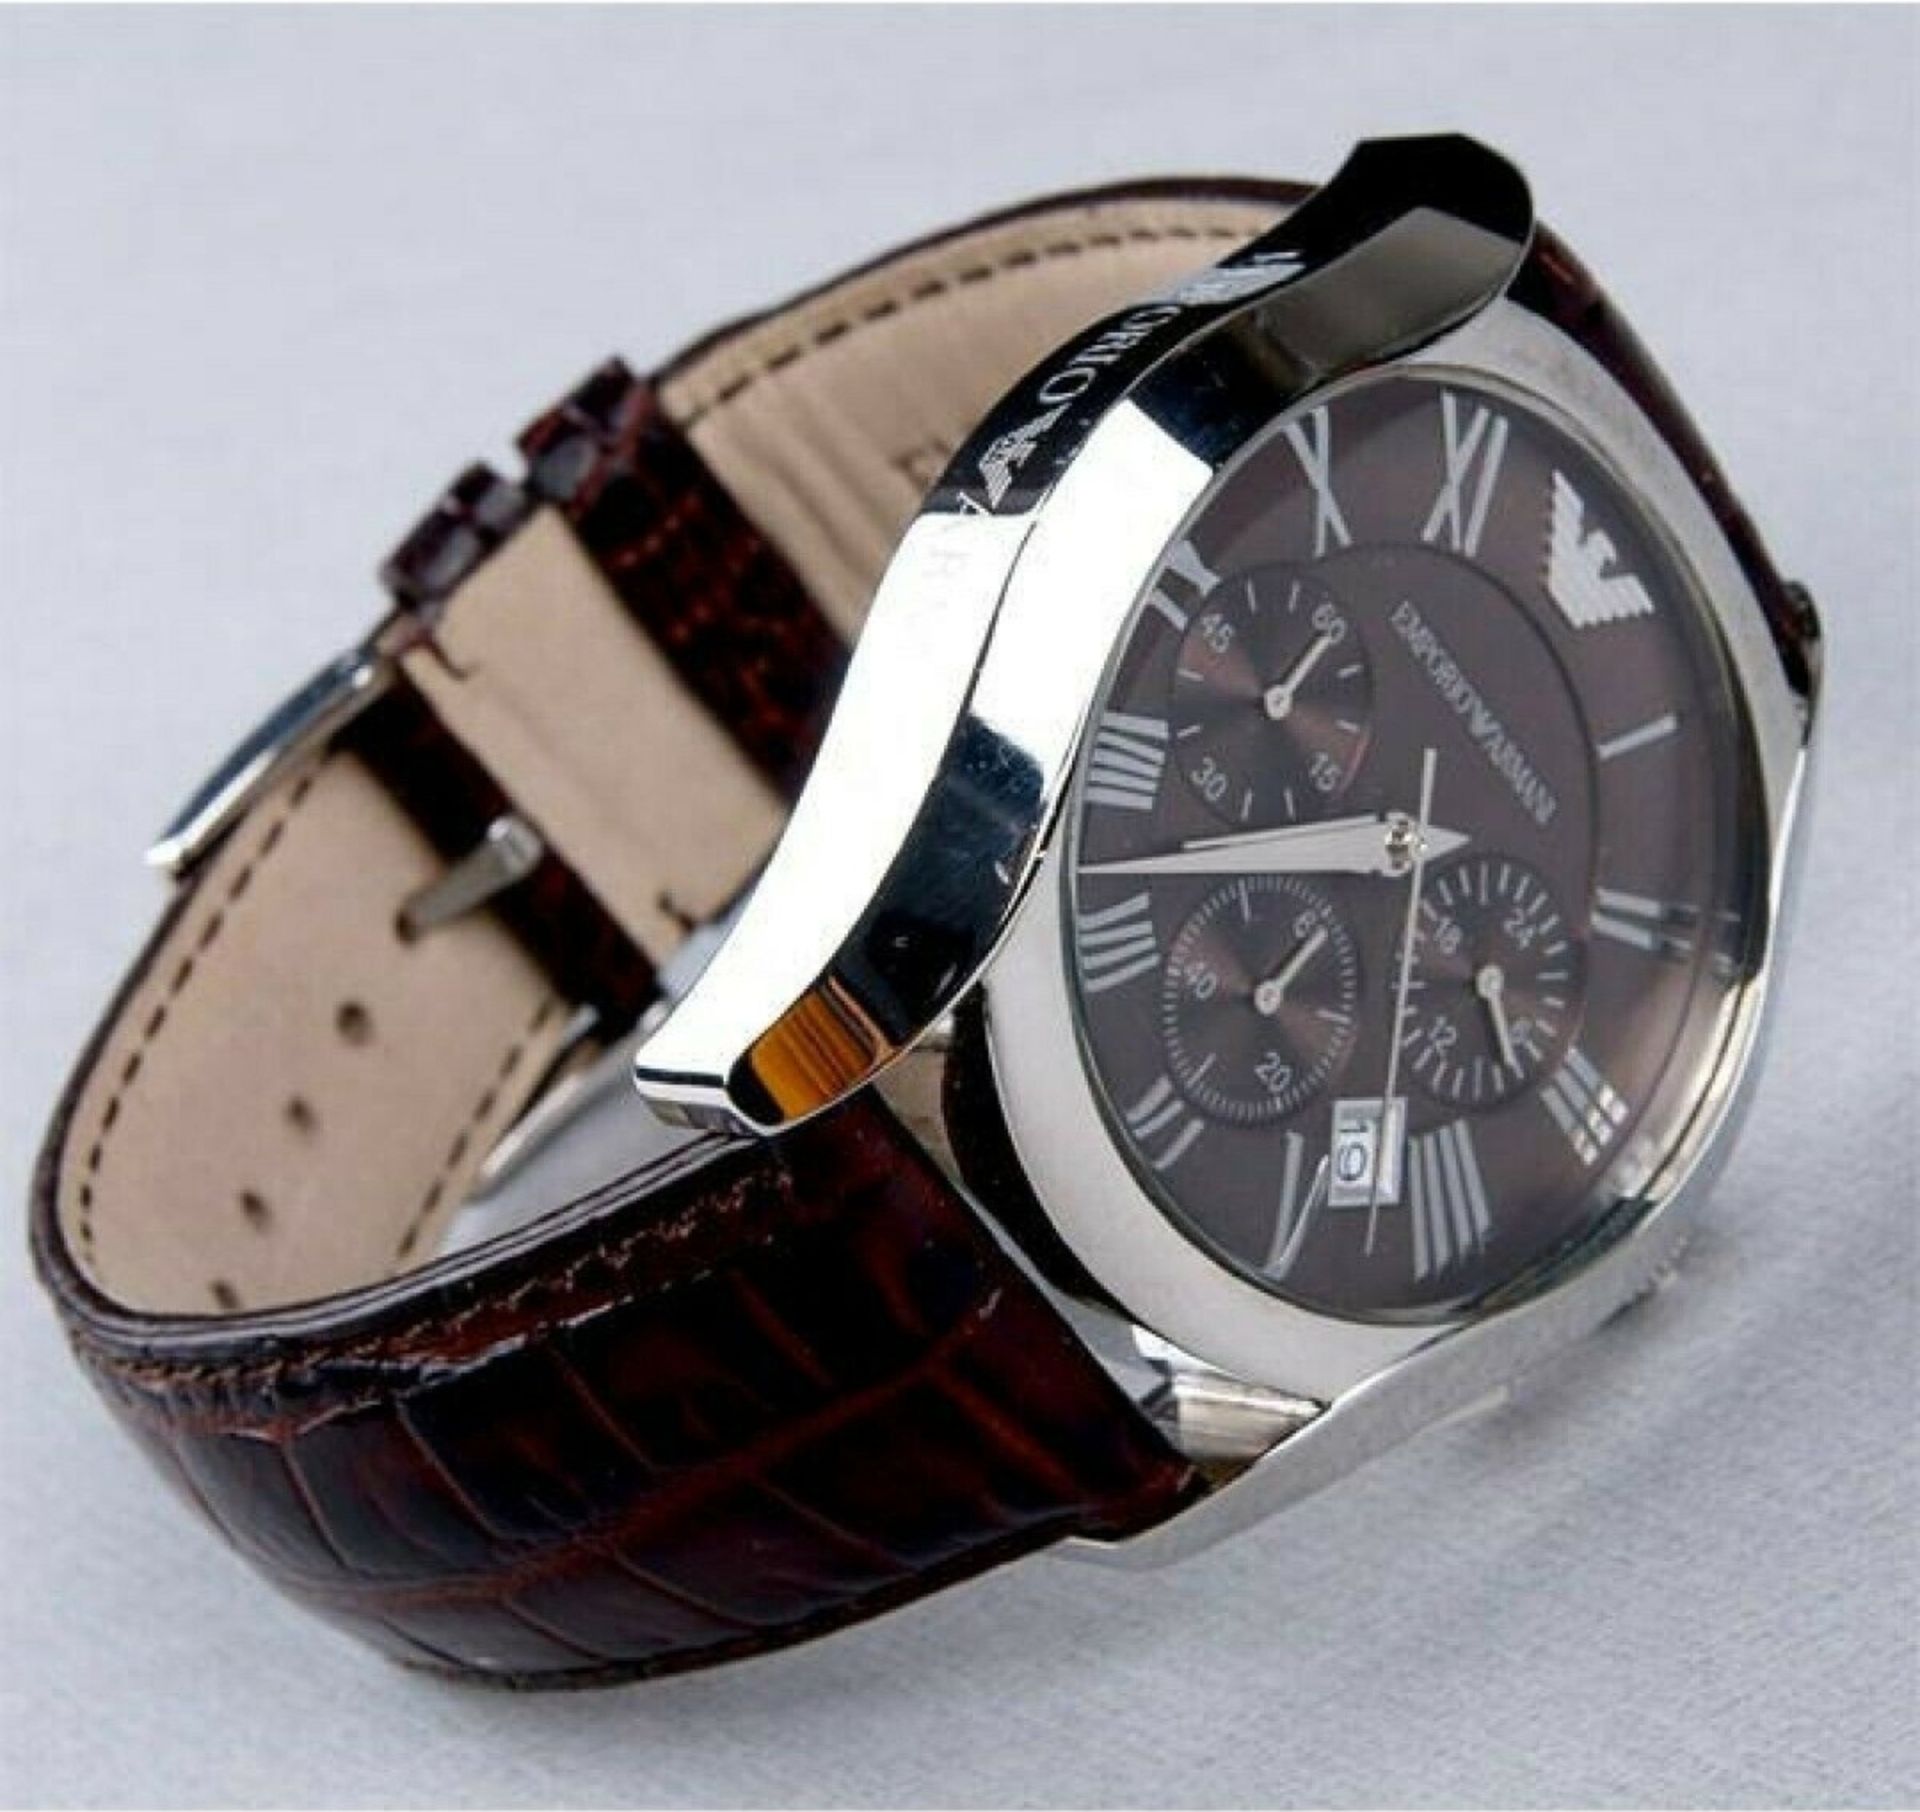 Emporio Armani AR0671 Men's Brown Leather Strap Quartz Chronograph Watch - Image 2 of 6